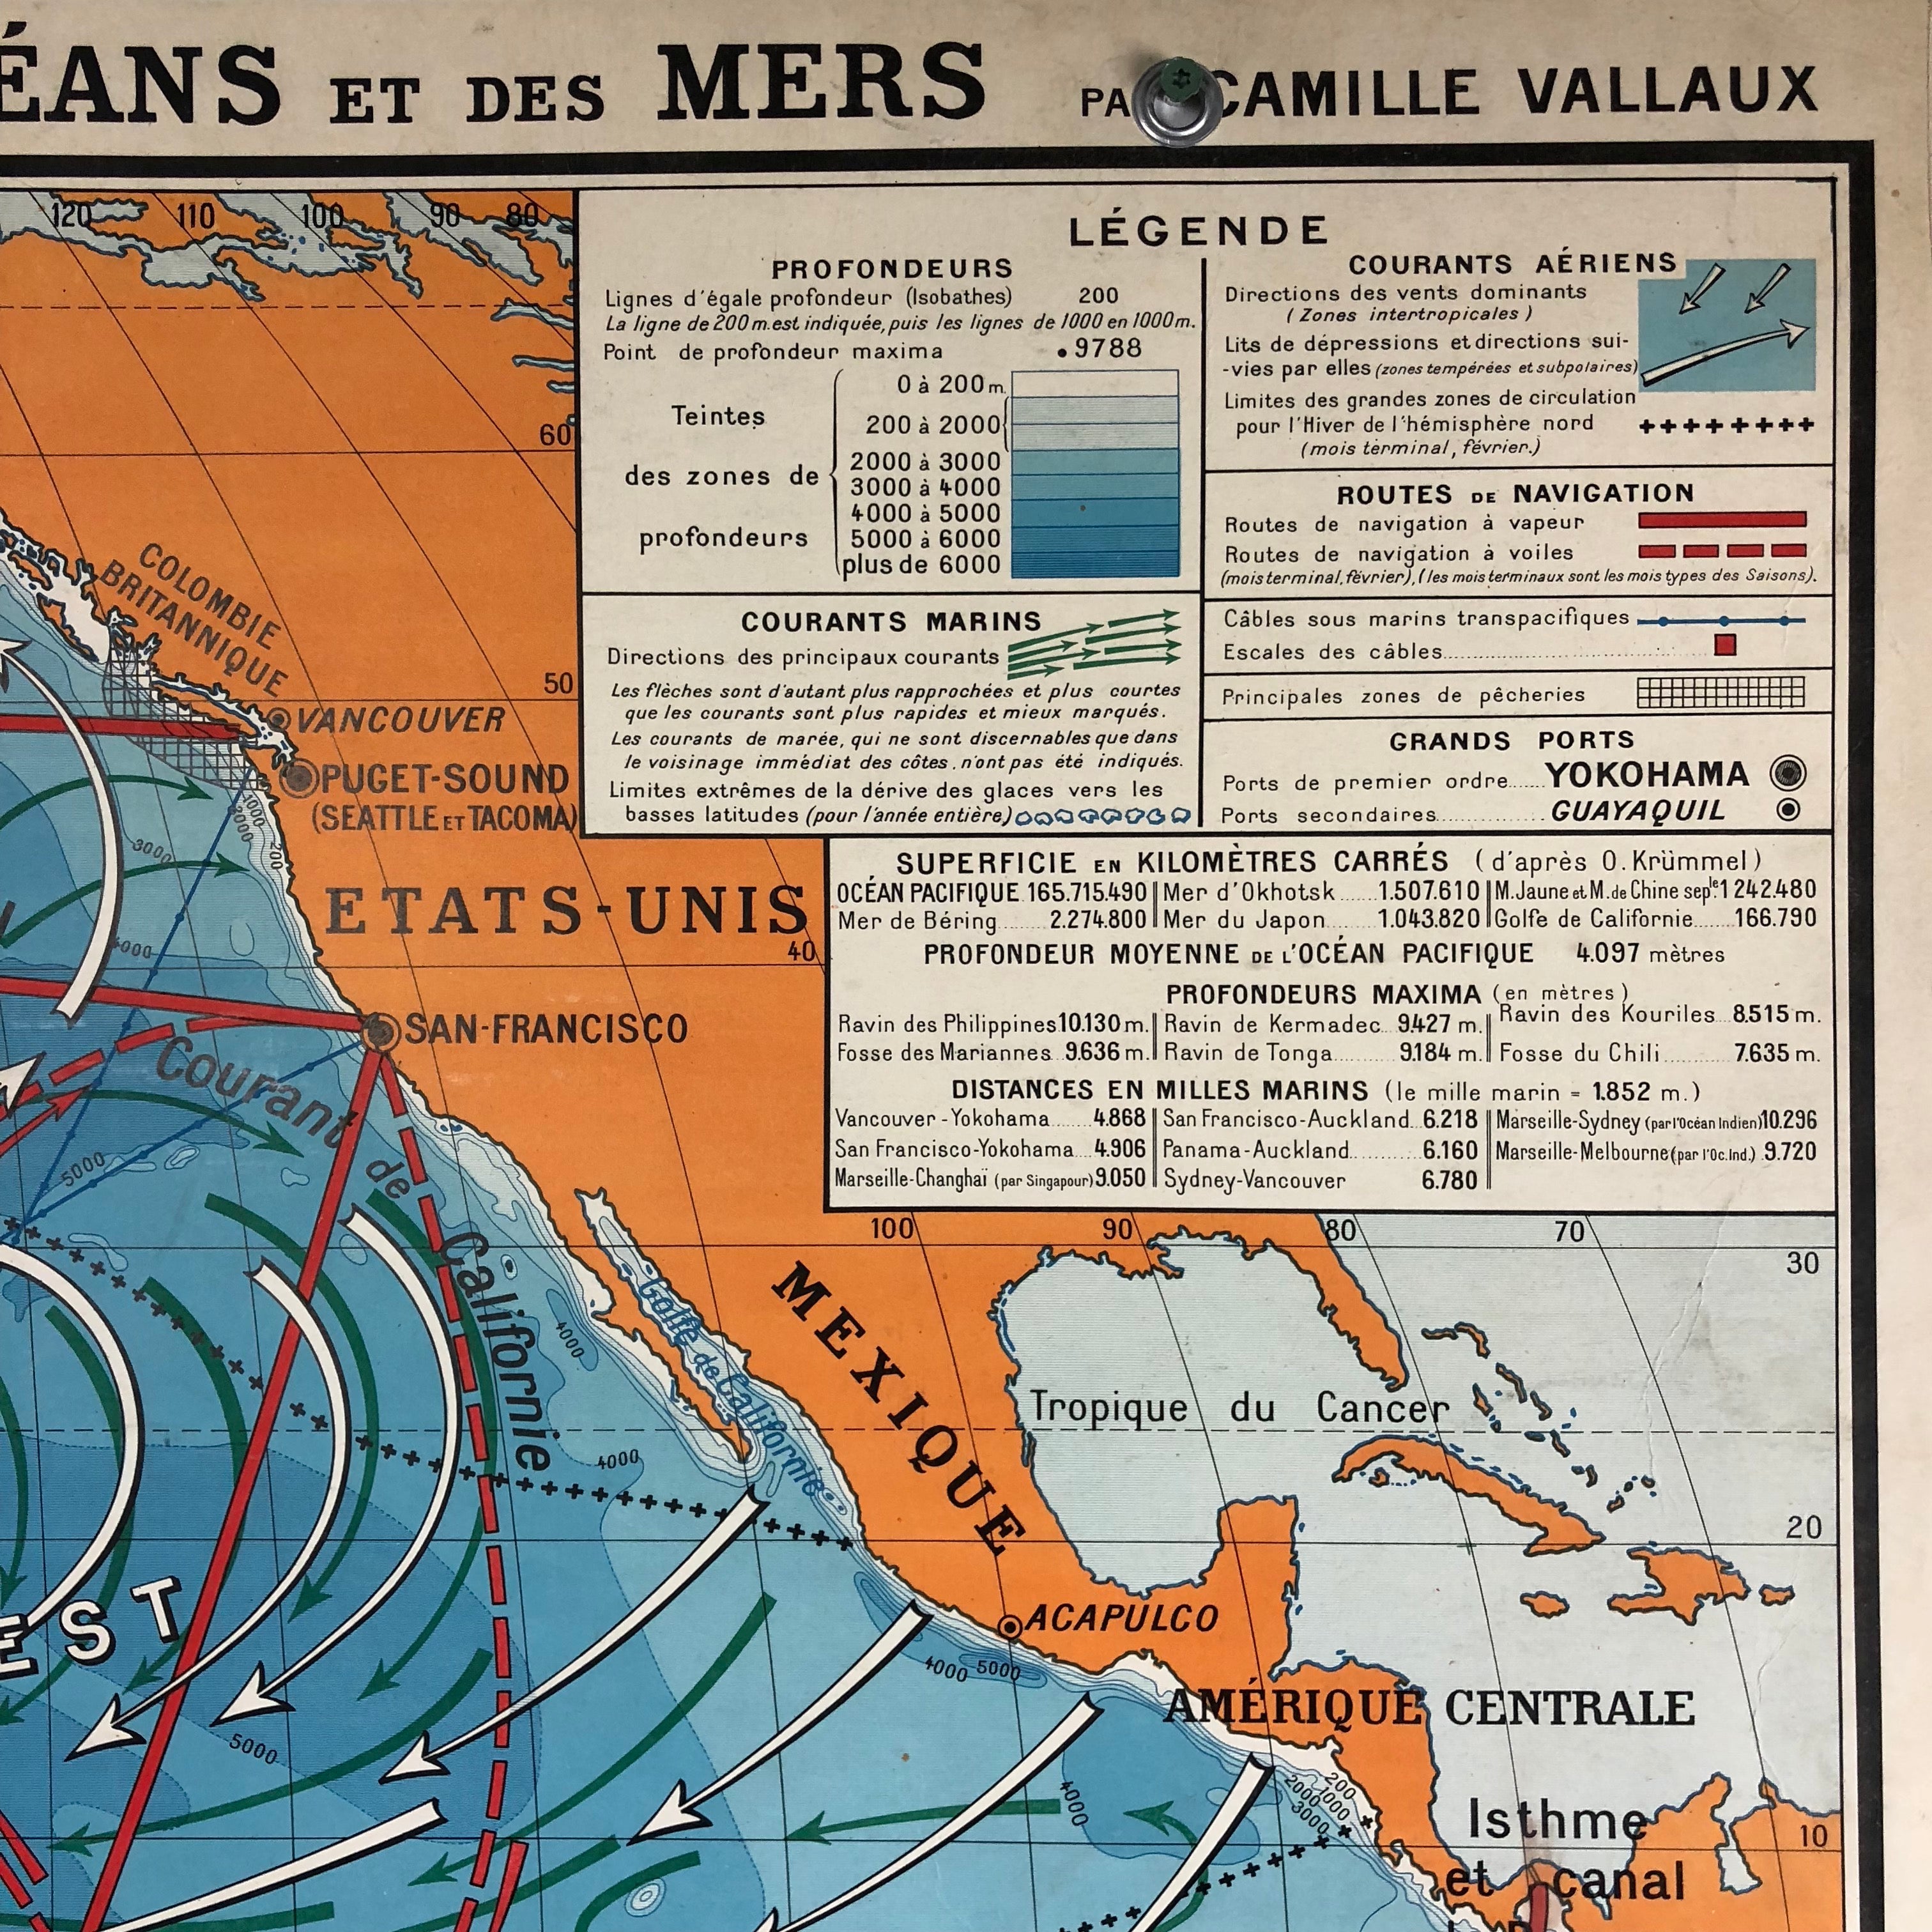 Vintage School Map "Ocean Pacifique"